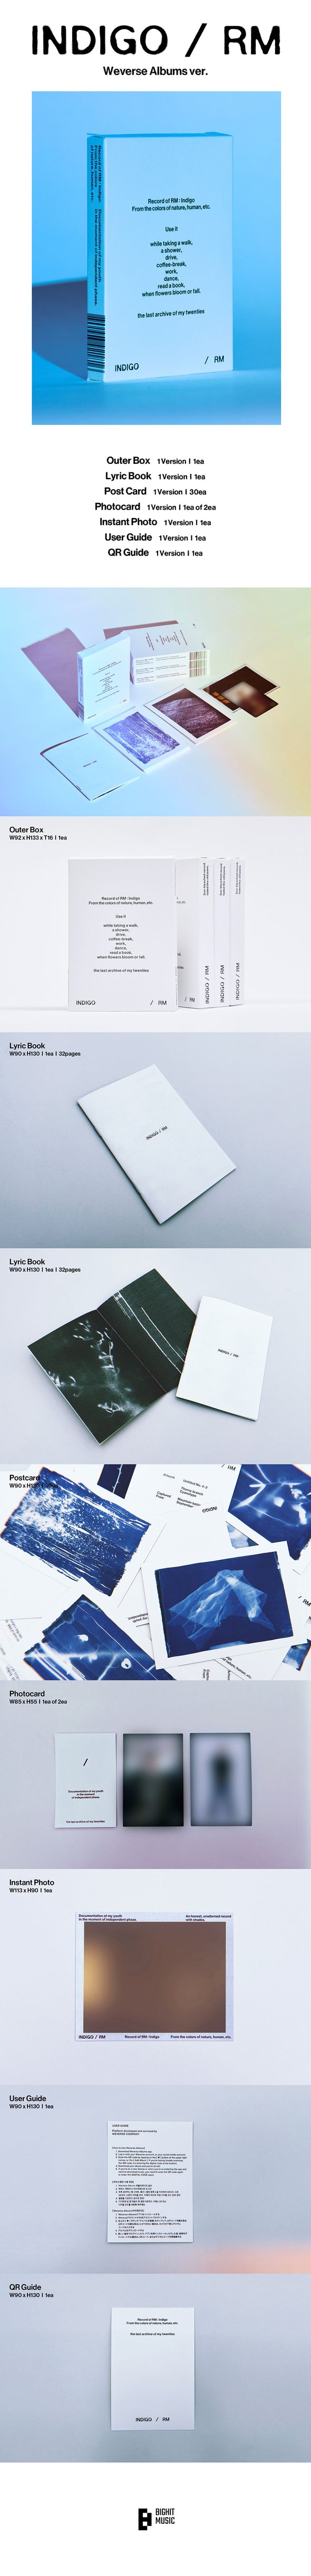 RM (BTS) - [INDIGO] Postcard Edition - Kpop Music 사랑해요